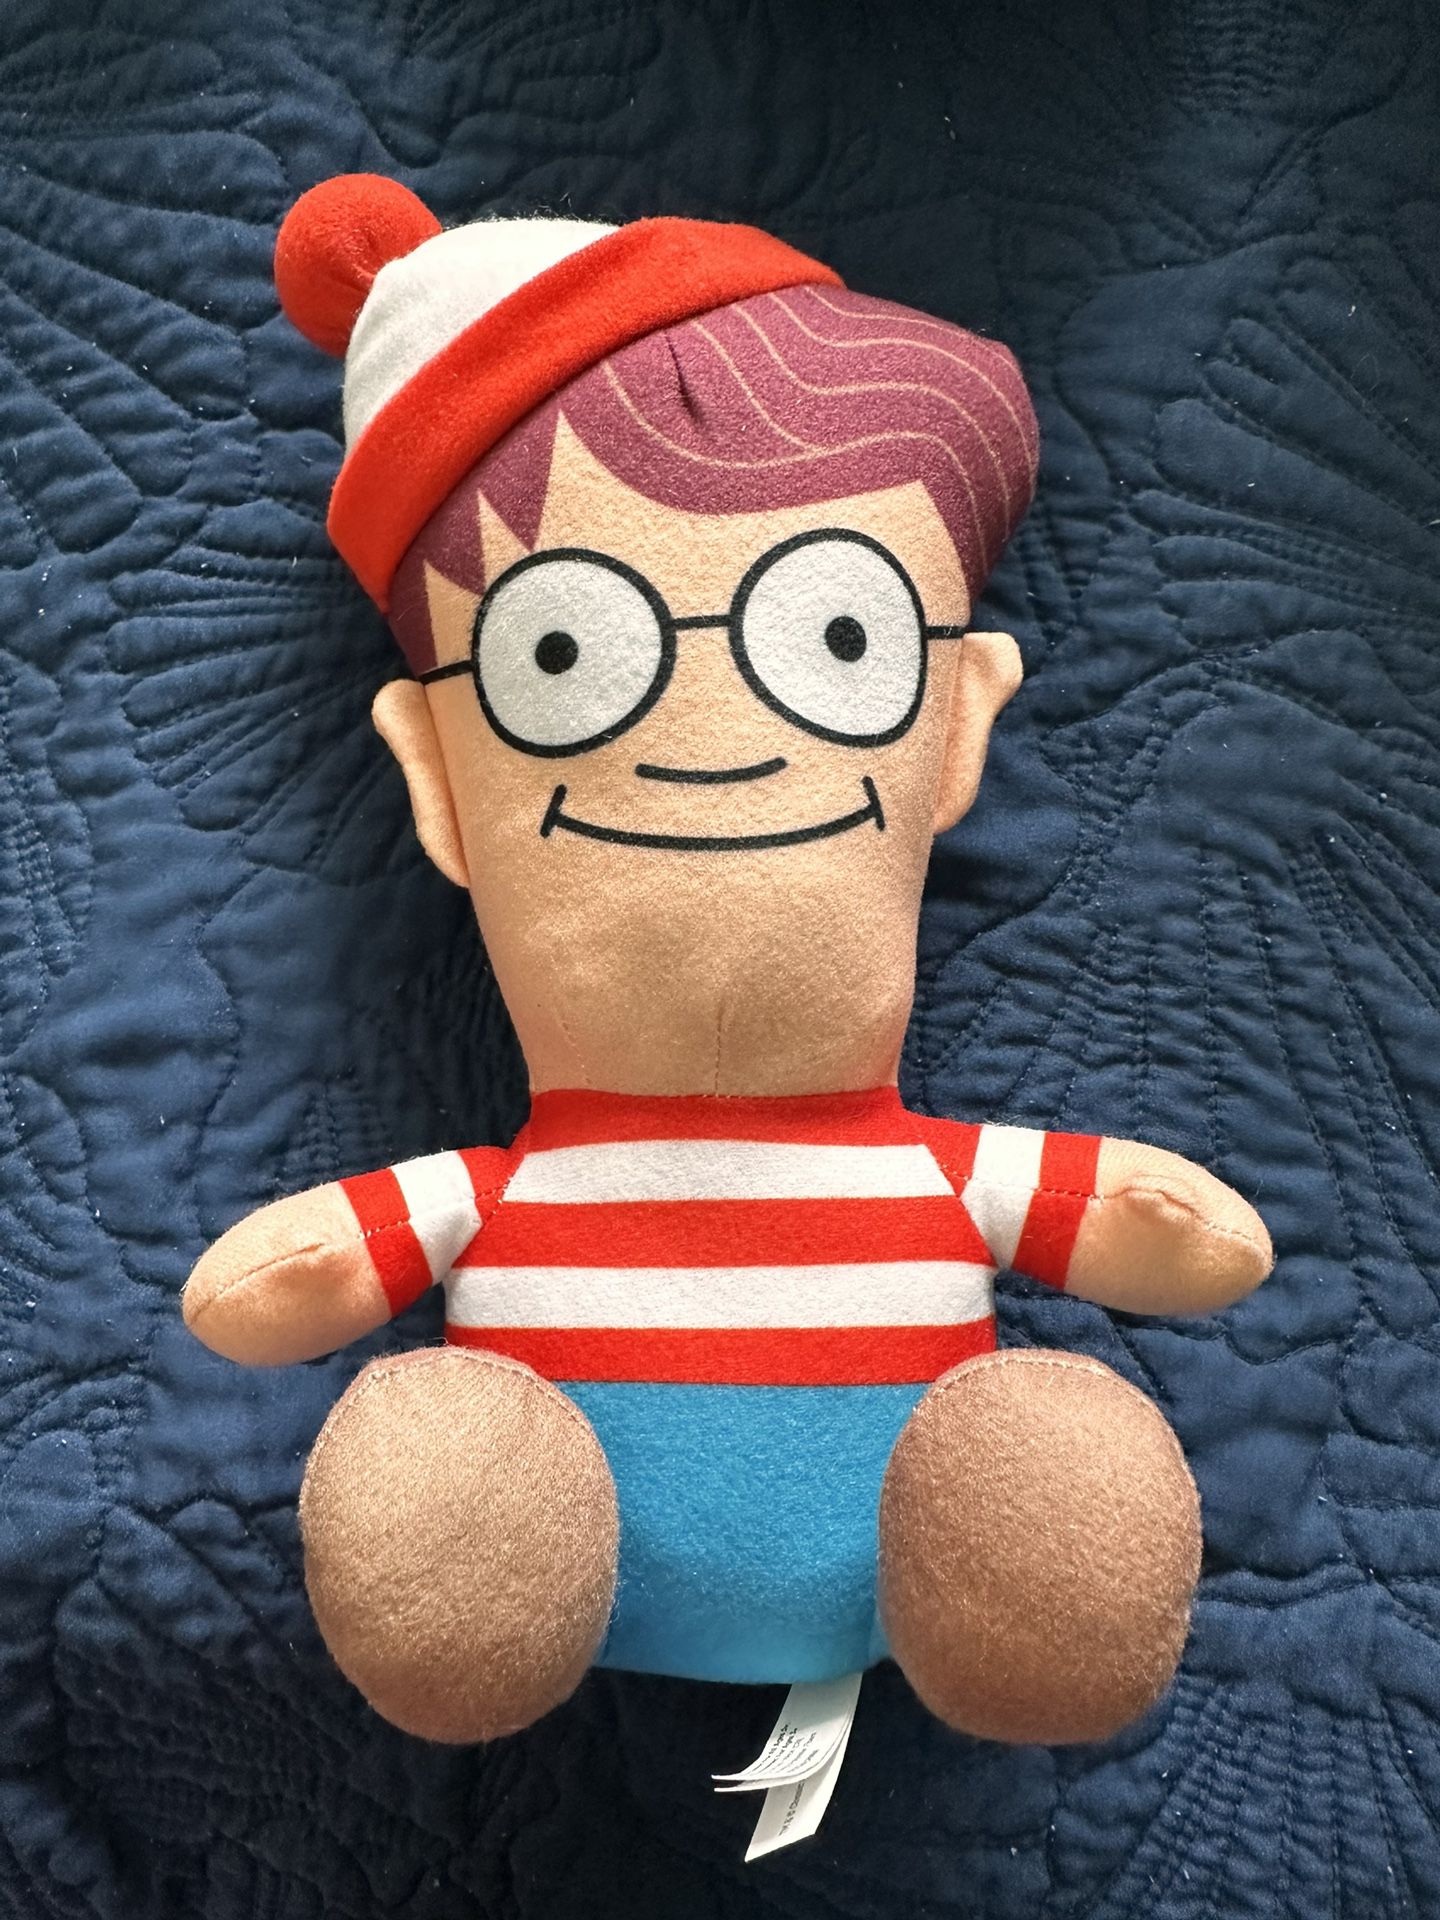  Where’s Waldo Plush Toy Factory 12” Big Head Cartoon Doll With Glasses